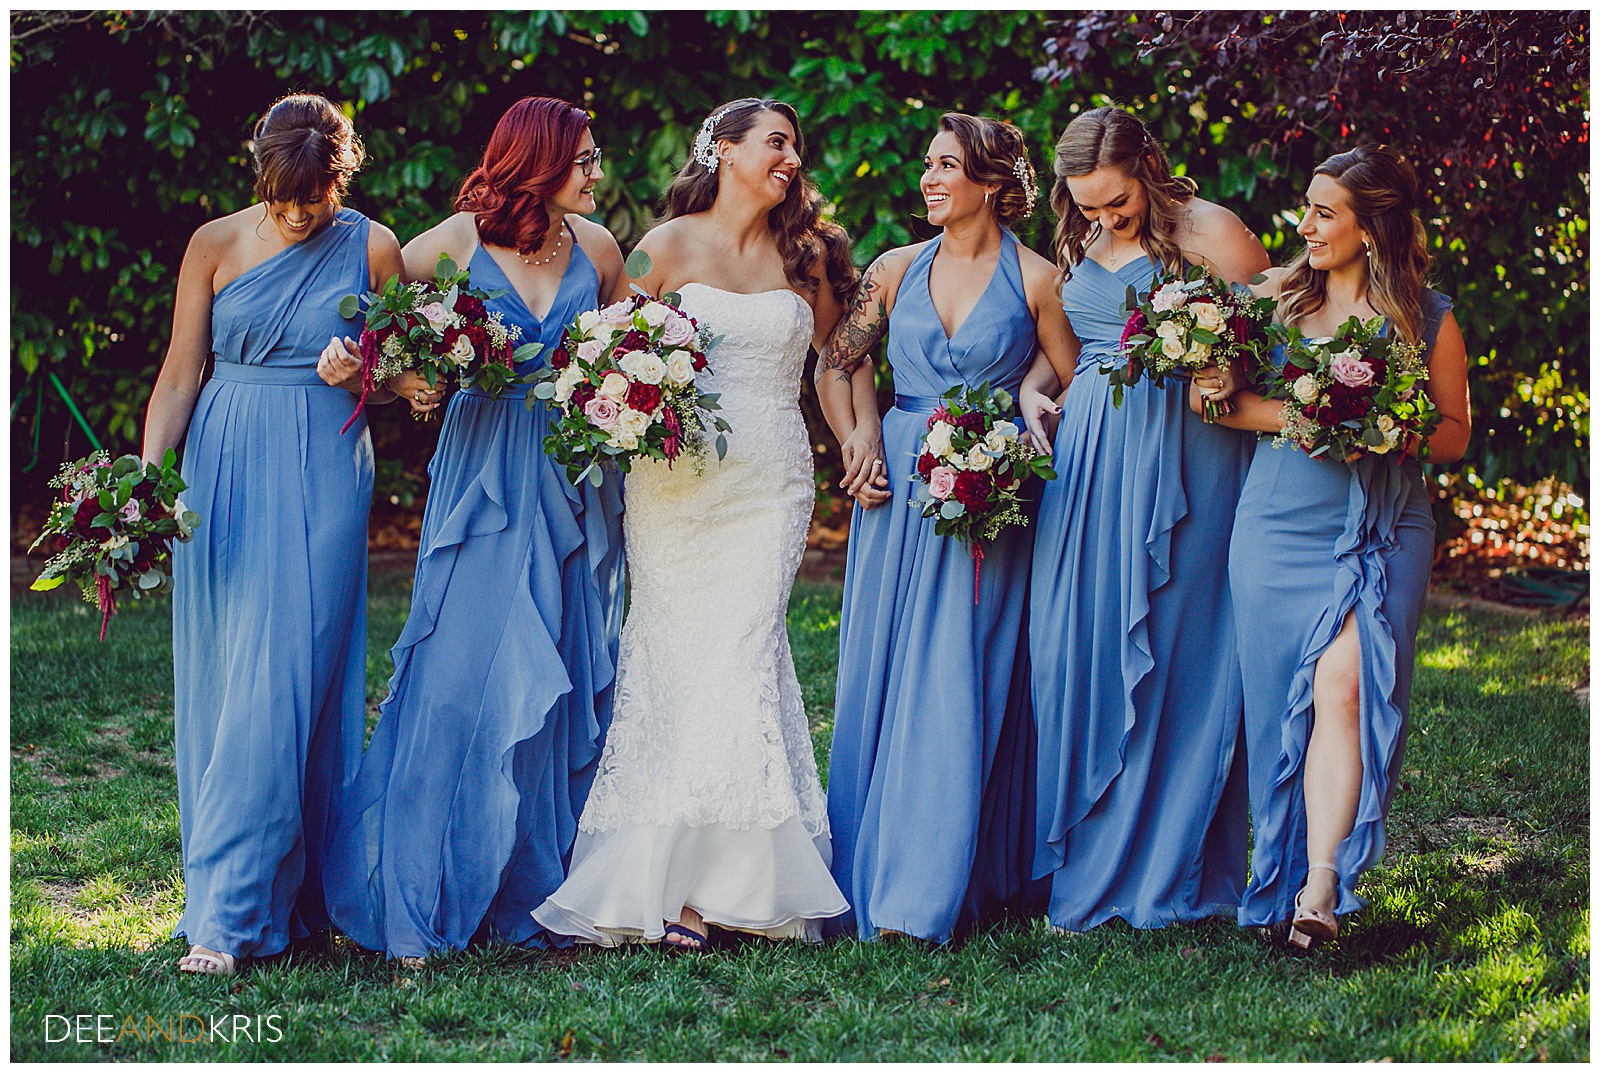 royal blue bridesmaid dresses, different styles same color dresses